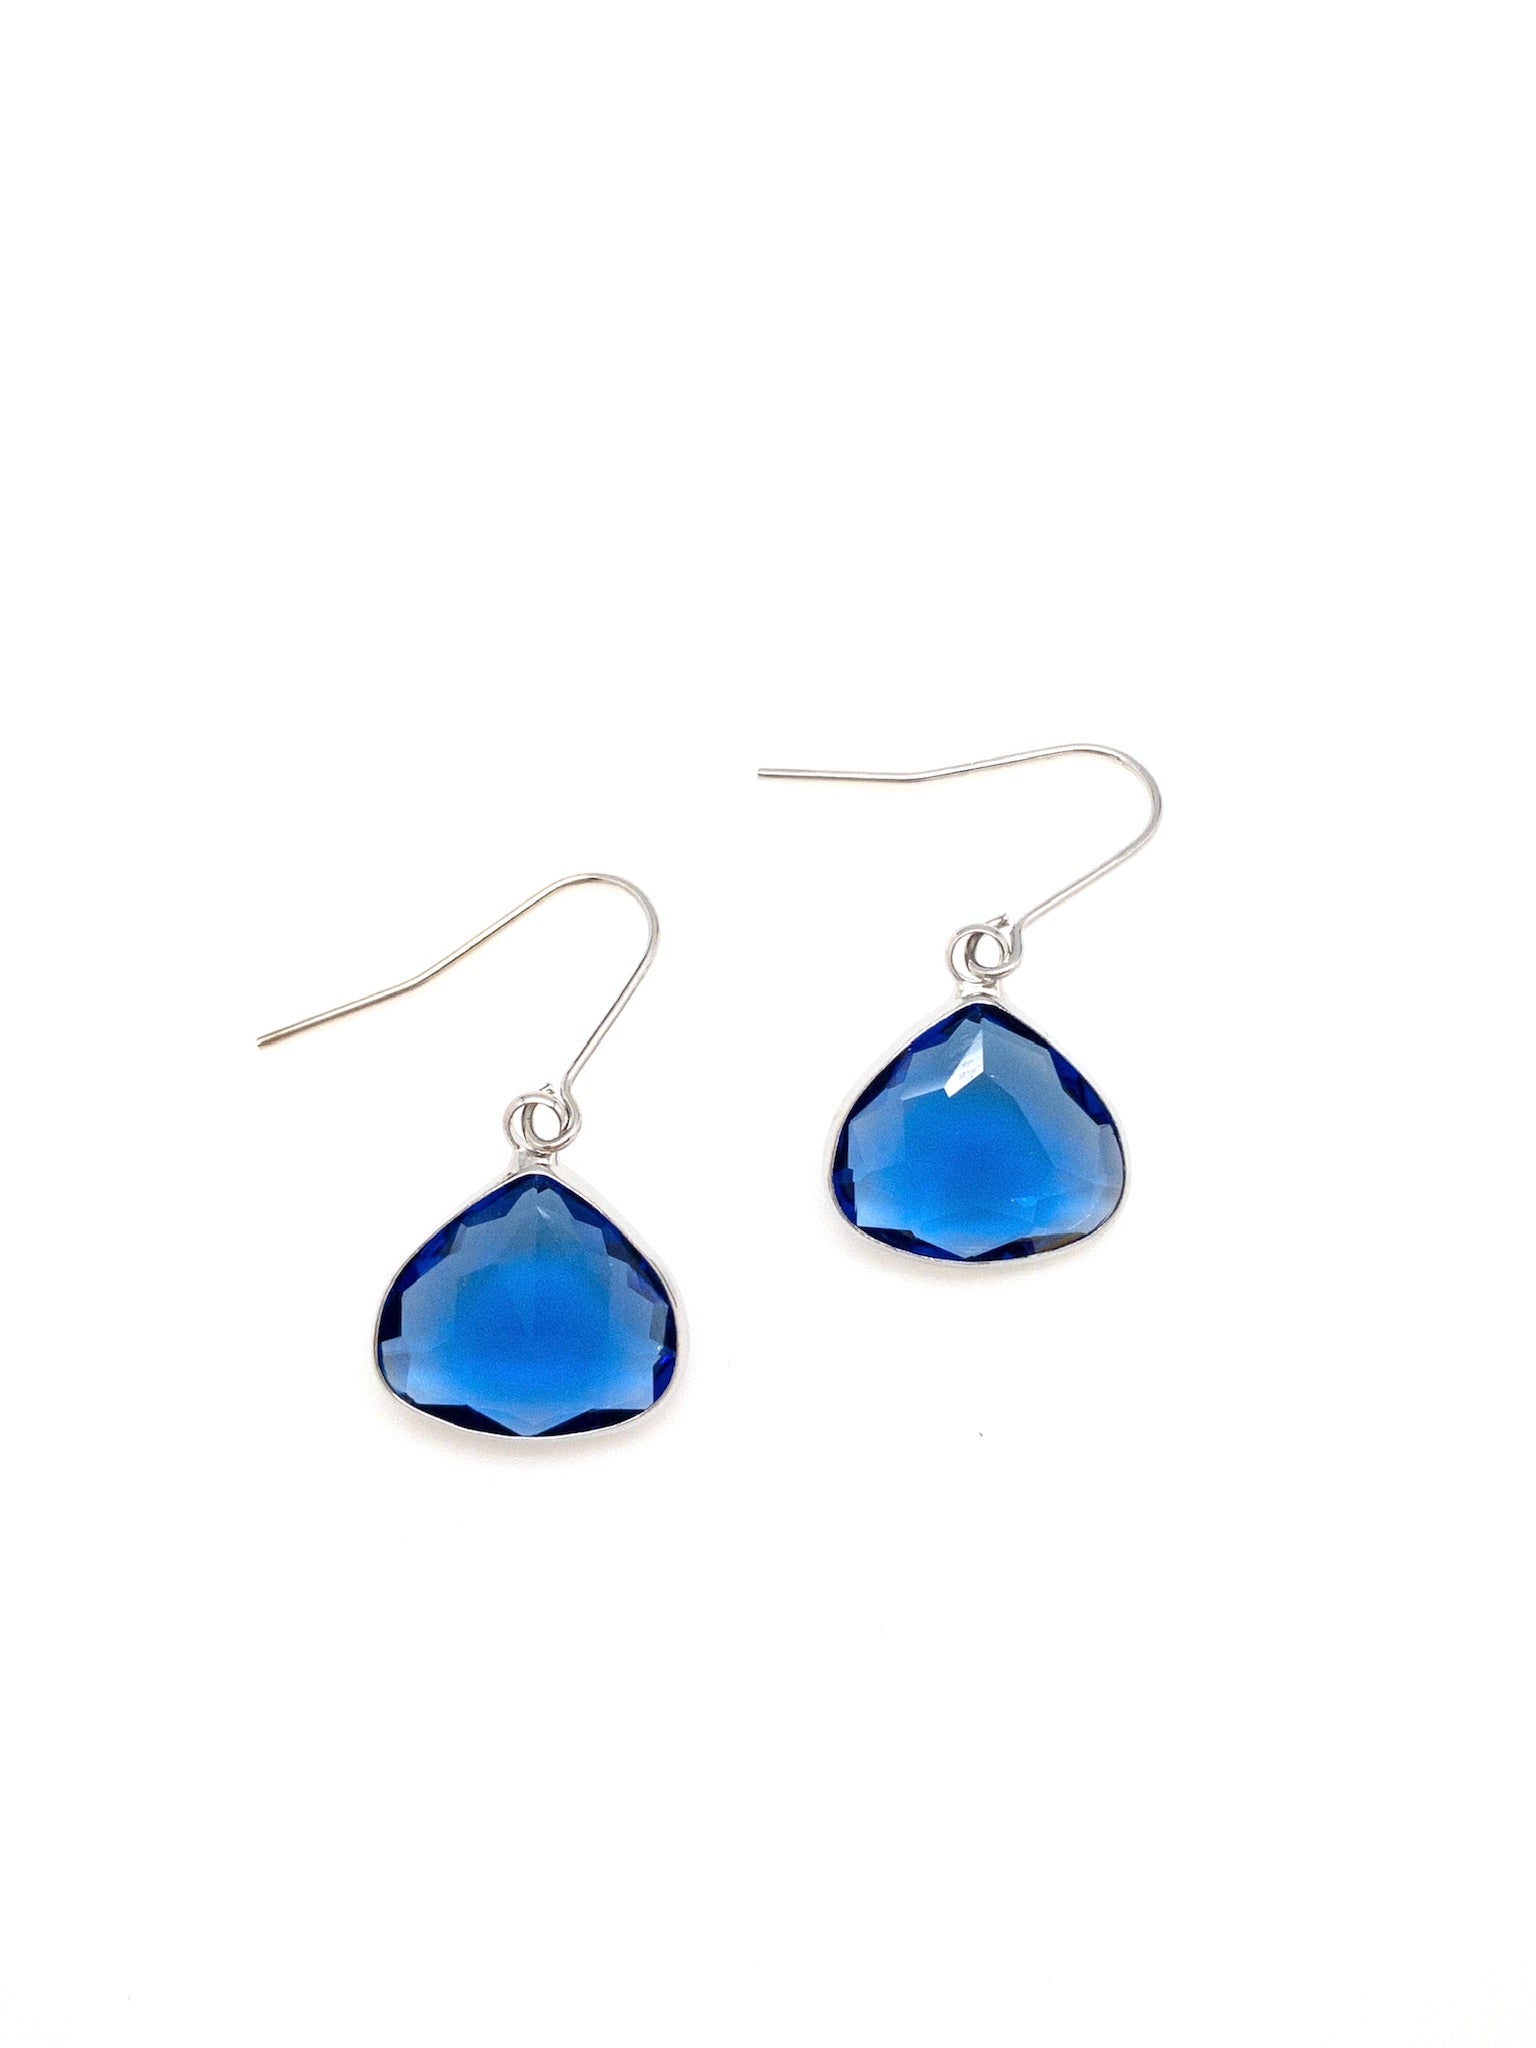 Kassie earrings in blue and silver